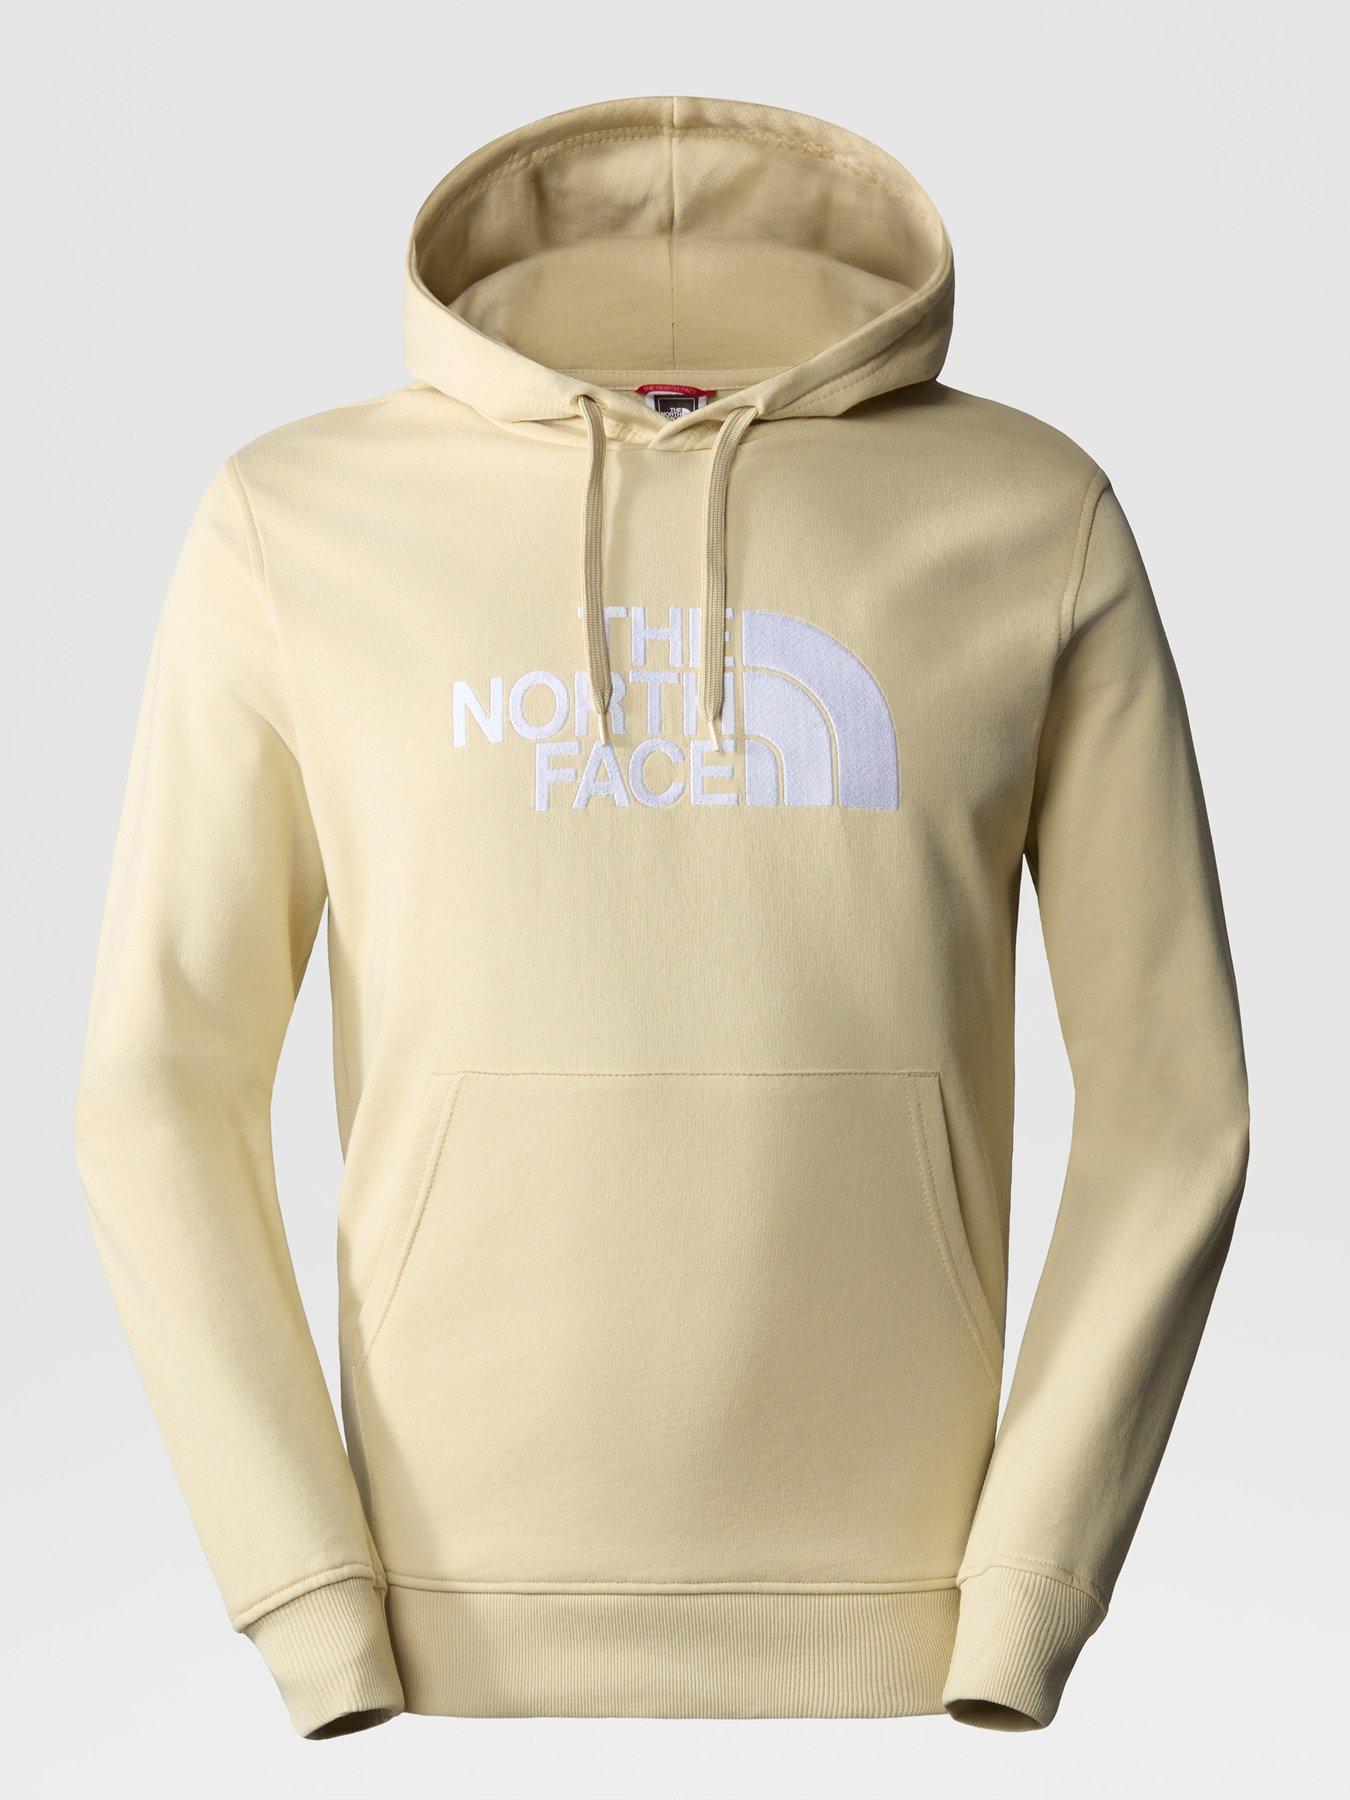 Shop Men's North Face Hoodies & Sweatshirts | Very Ireland